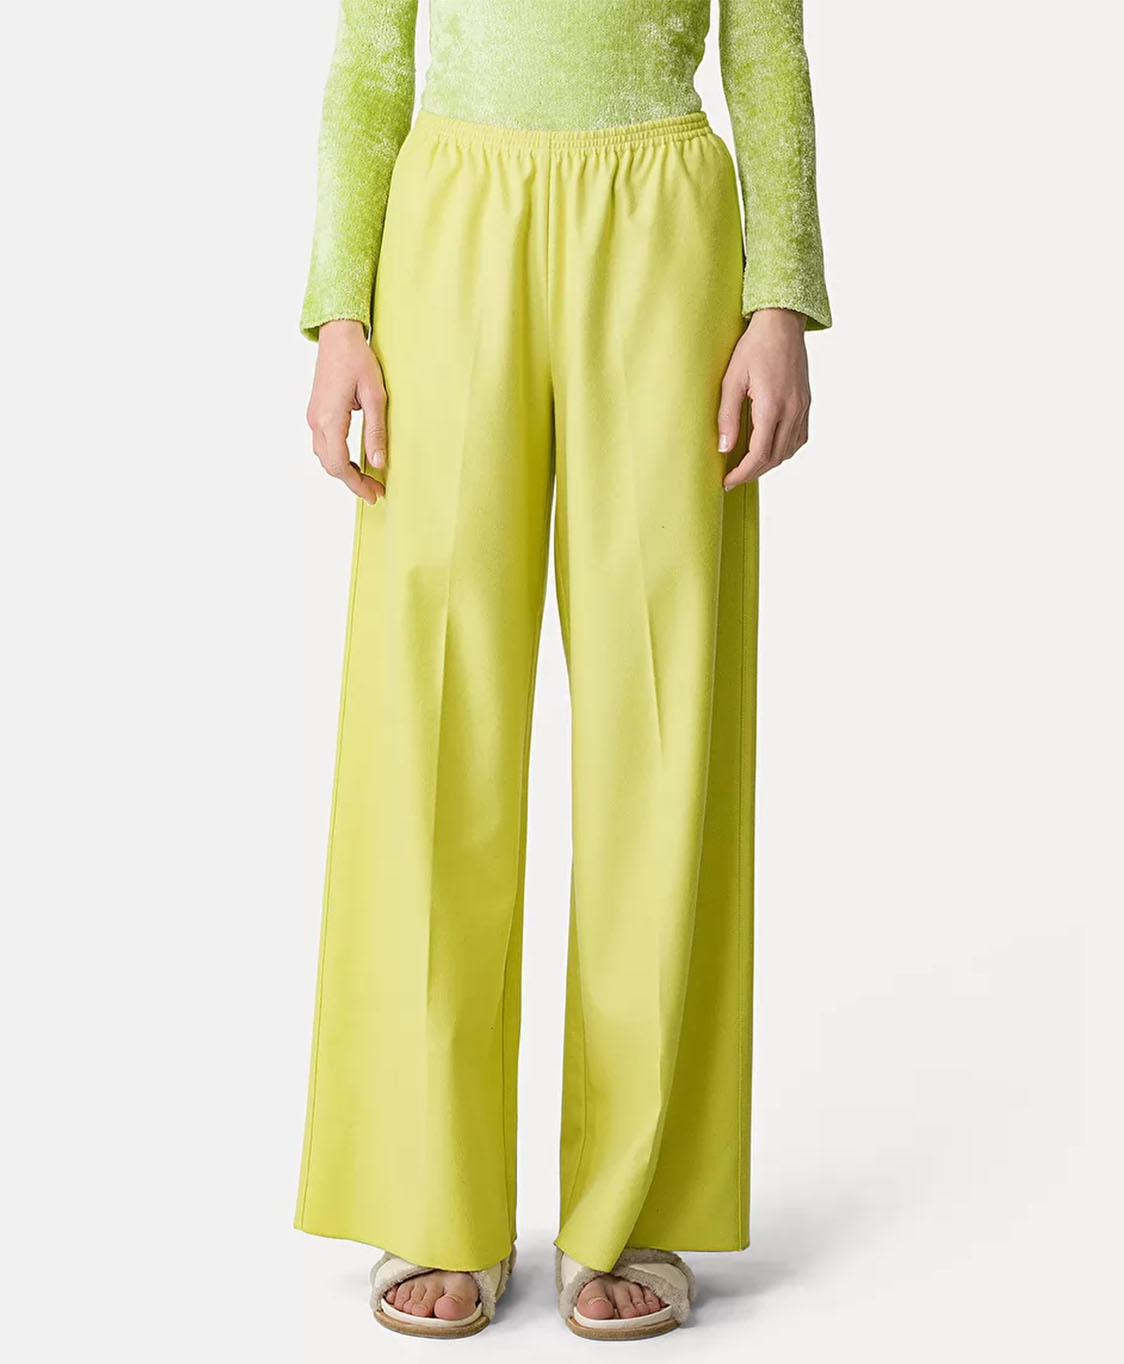 Pantalon Pants Wool Cloth Elasticated licht groen